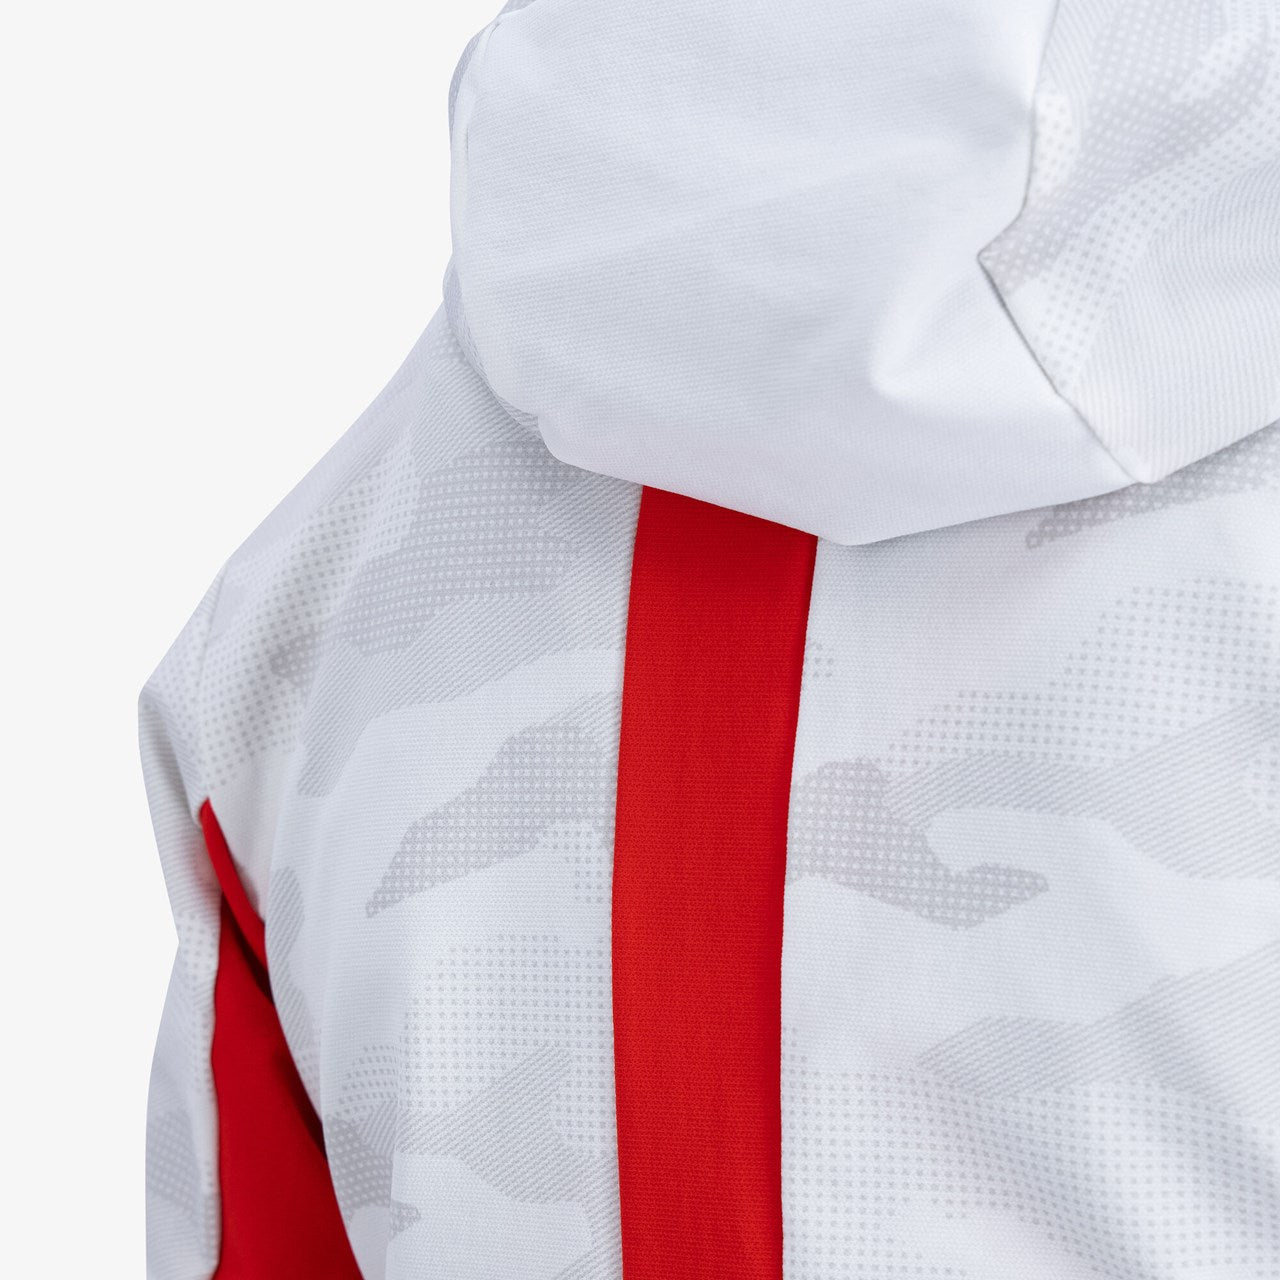 Surmount - Women's Soft Shield Jacket